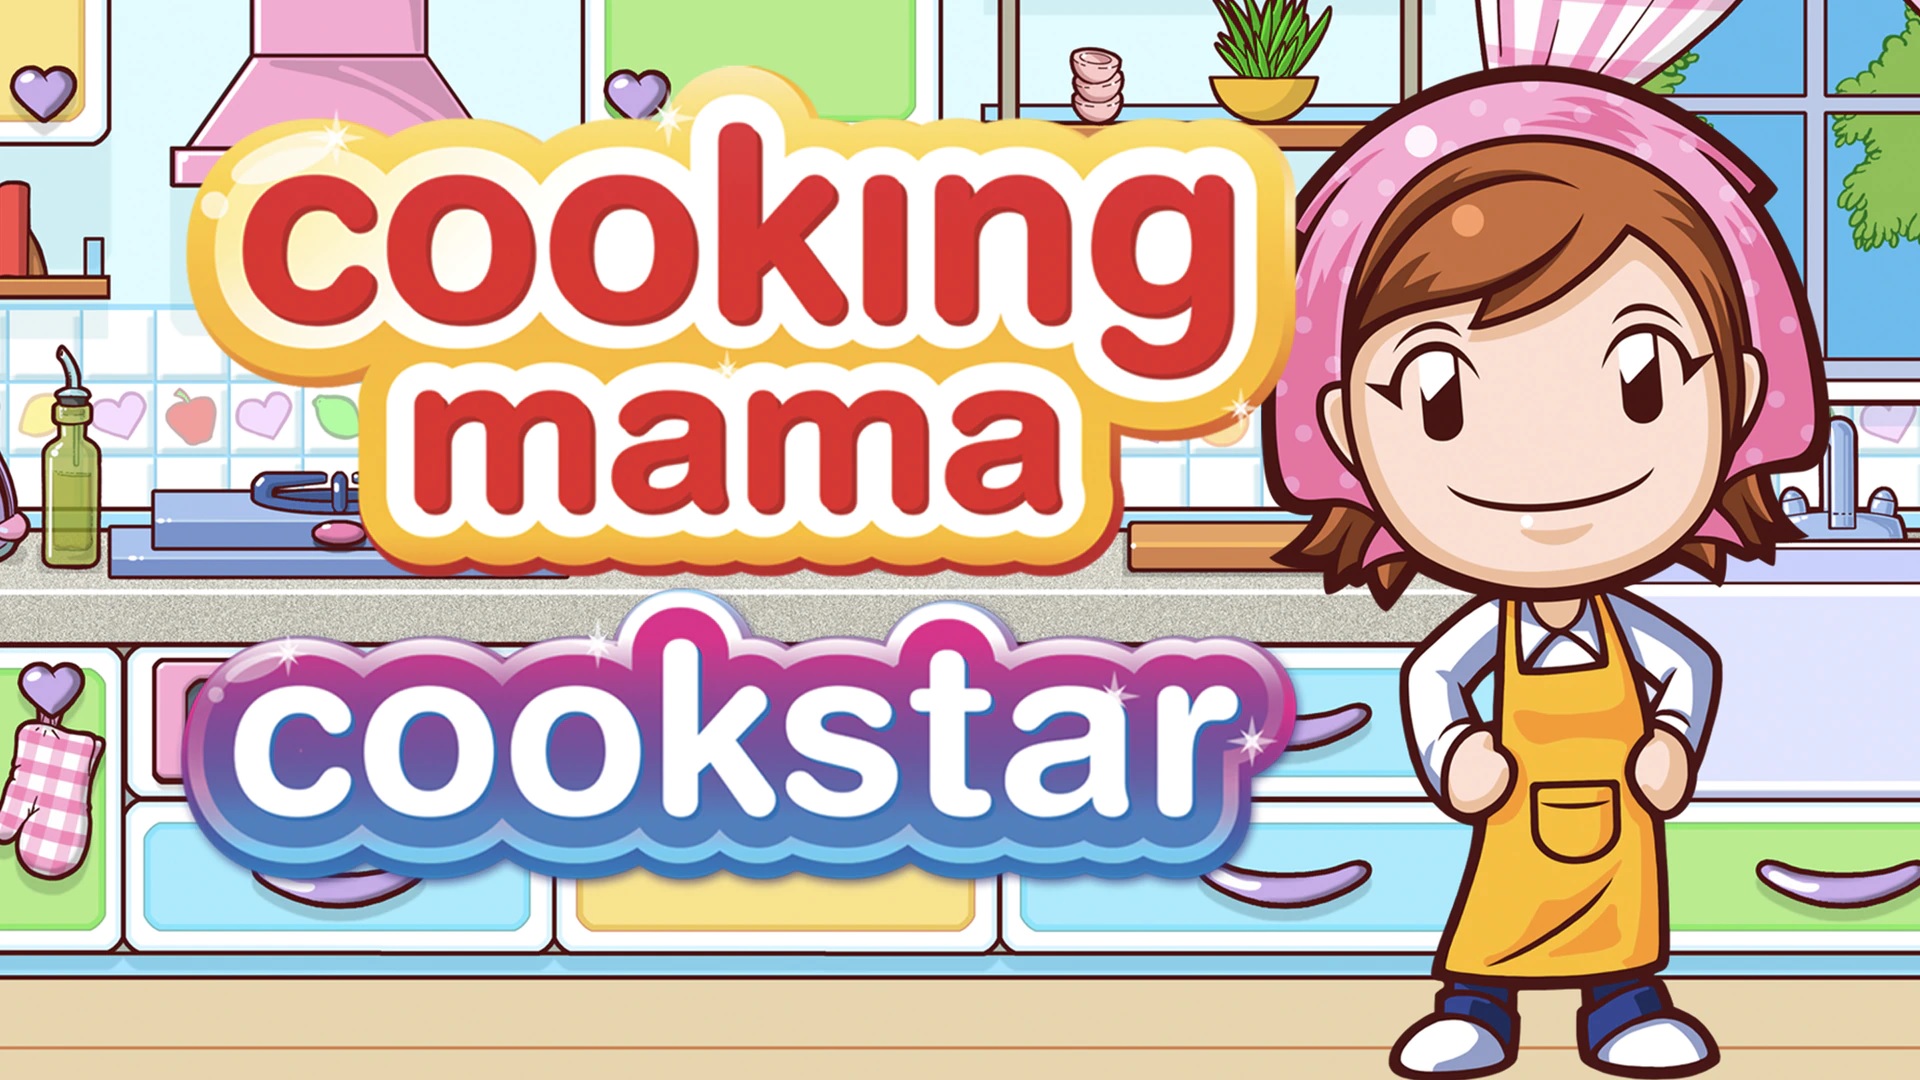 Cooking Mama Cookstar 03 27 21 1